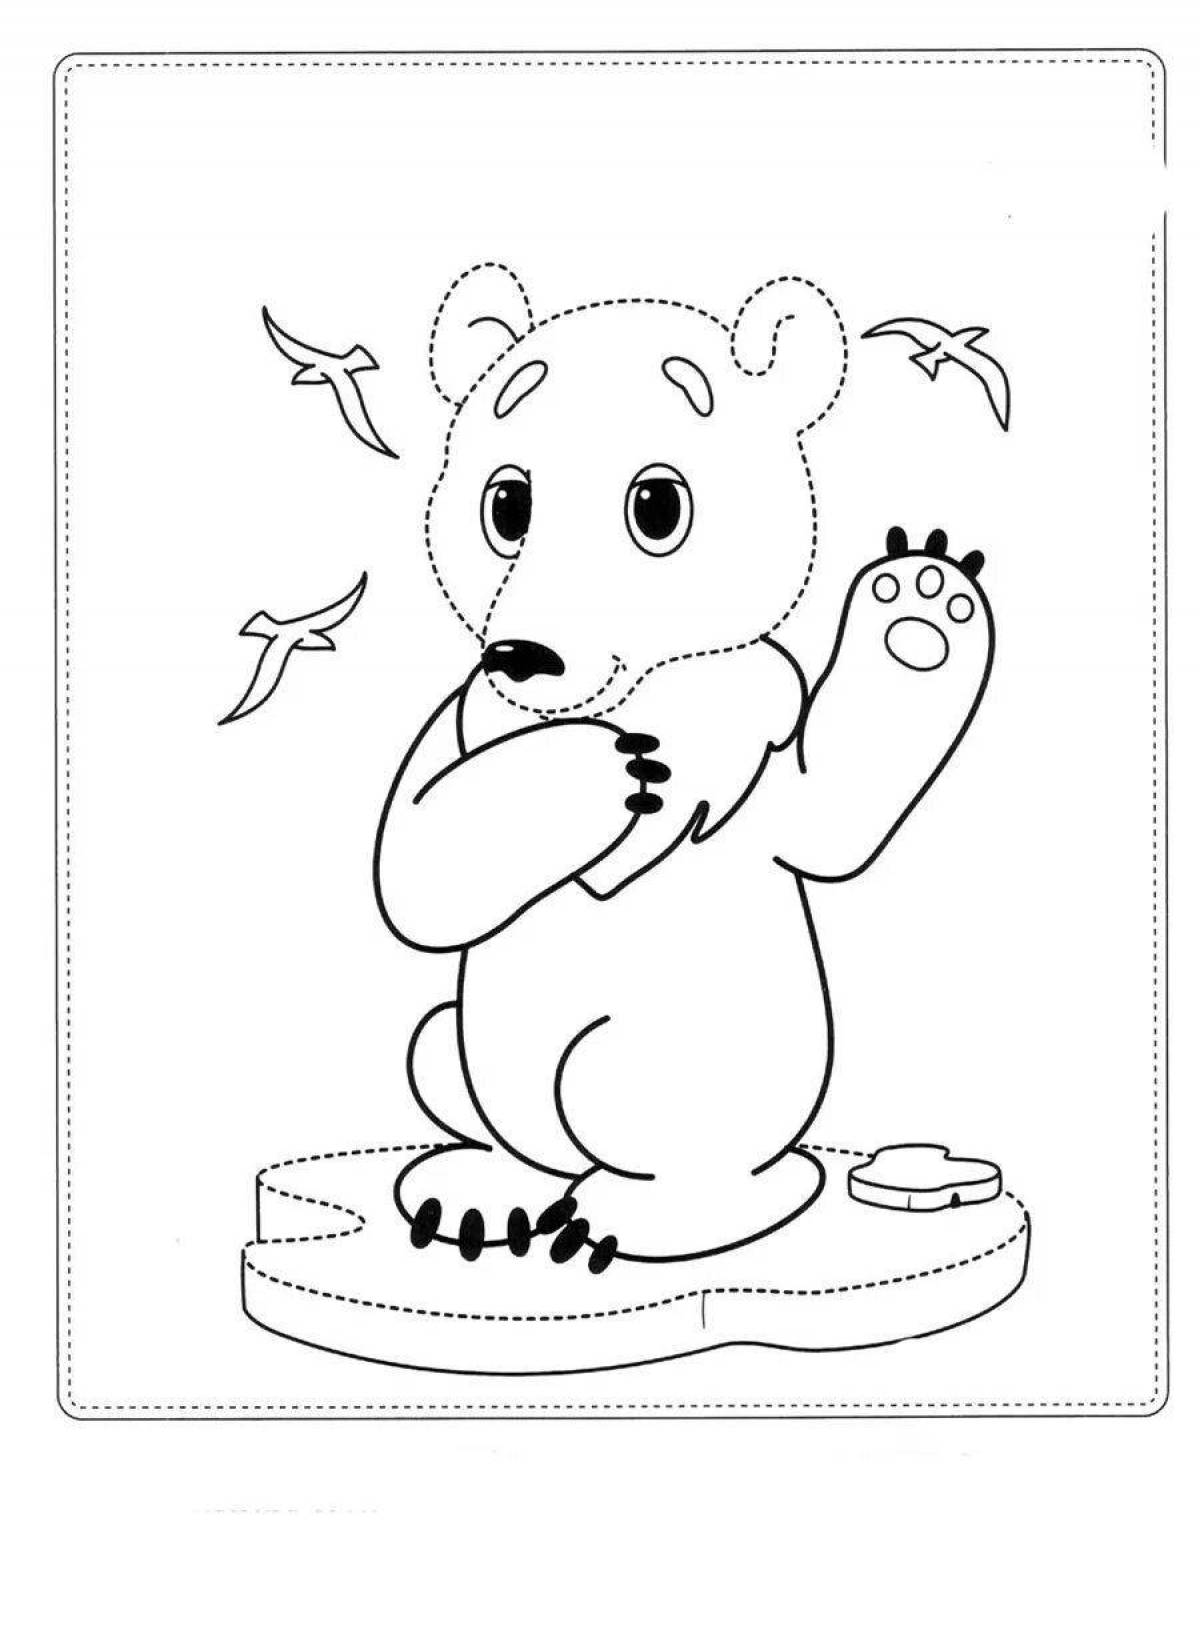 Umka cute little bear coloring page